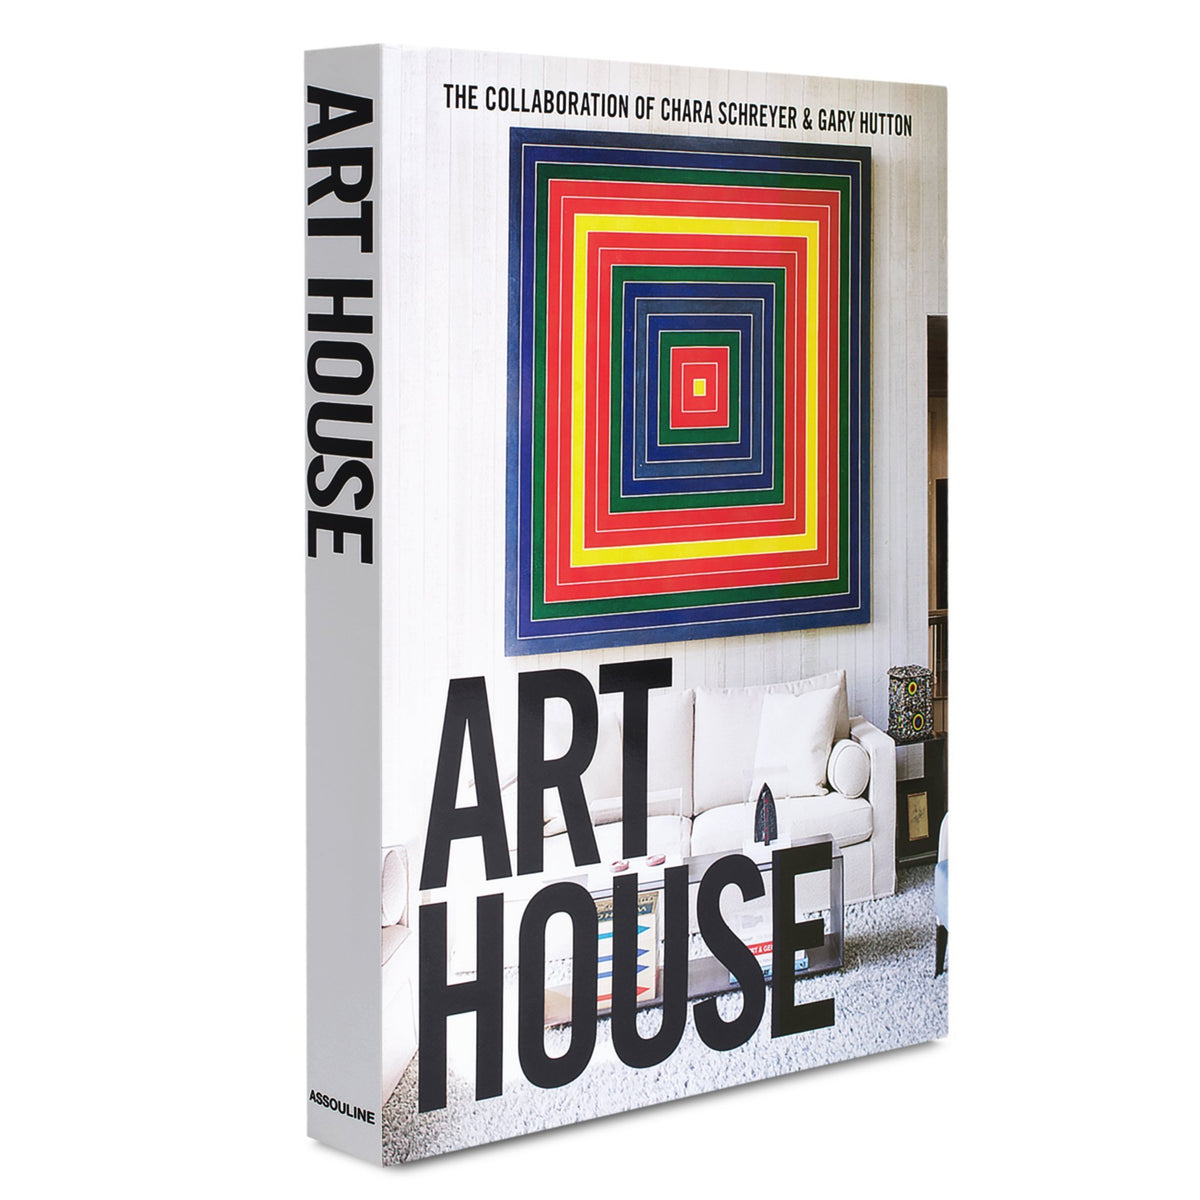 "Art House"